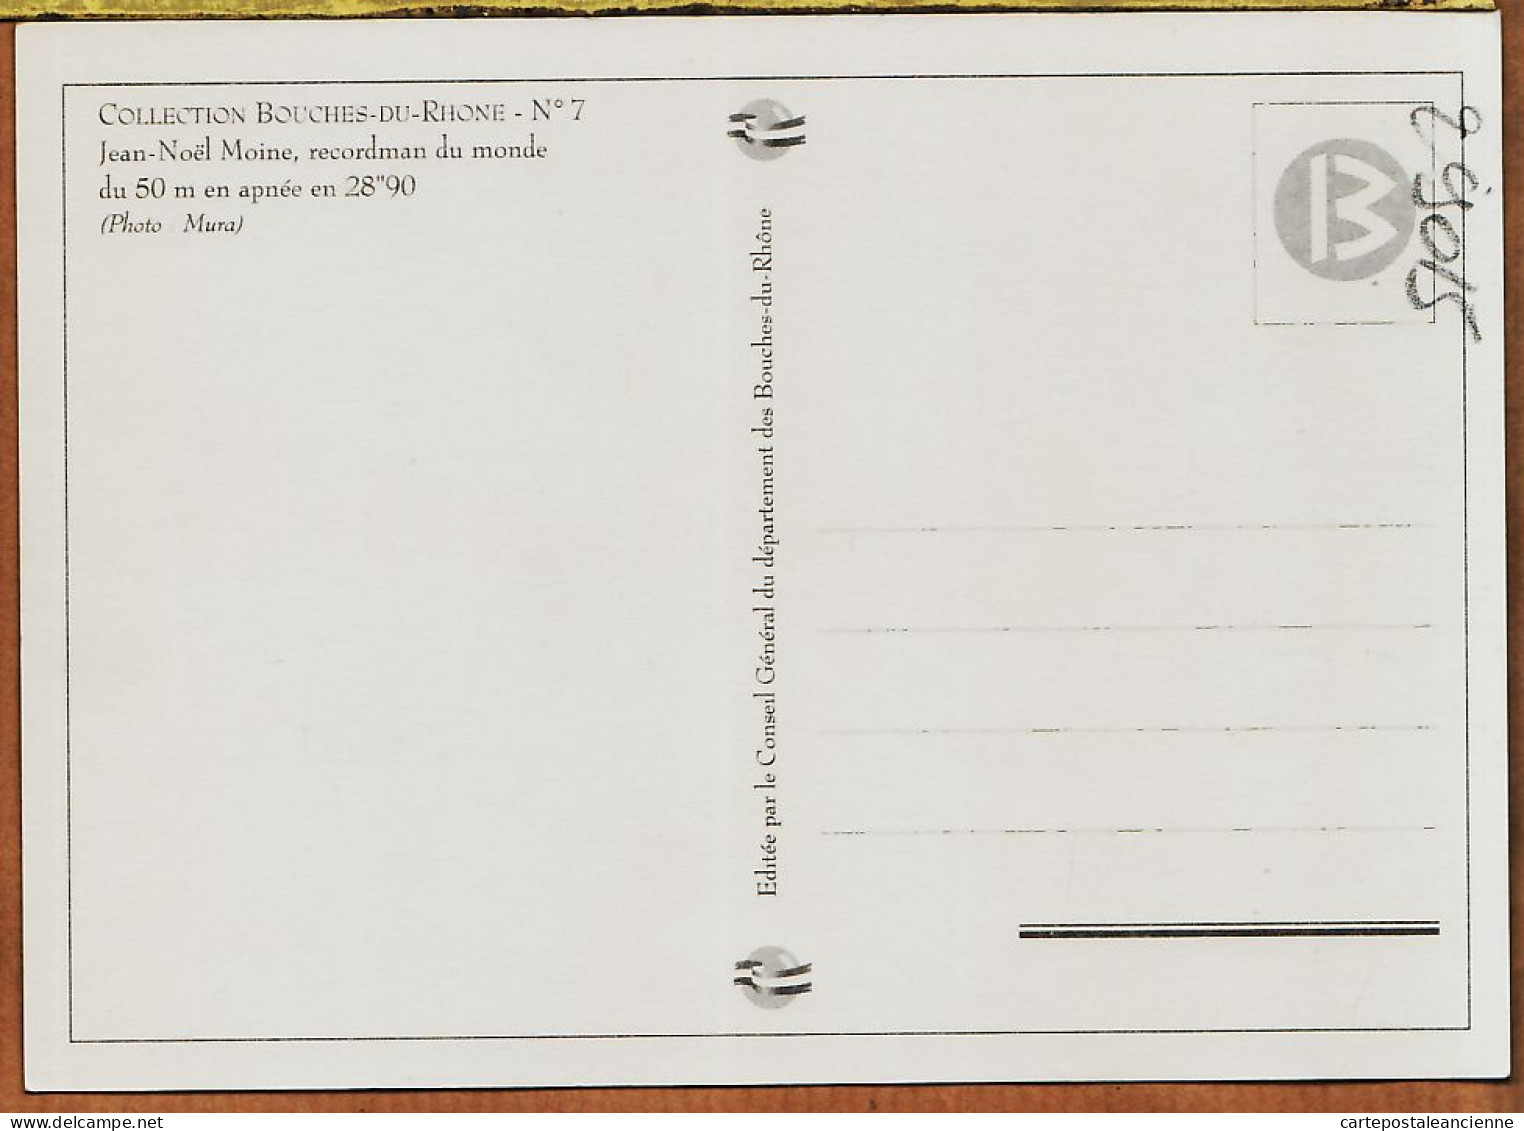 04811 / MARSEILLE Jean-Noël MOINE Recordman Du Monde 50 M Apnée 28"90 Photo MURA Collection BOUCHES Du RHONE N°7 - Schwimmen